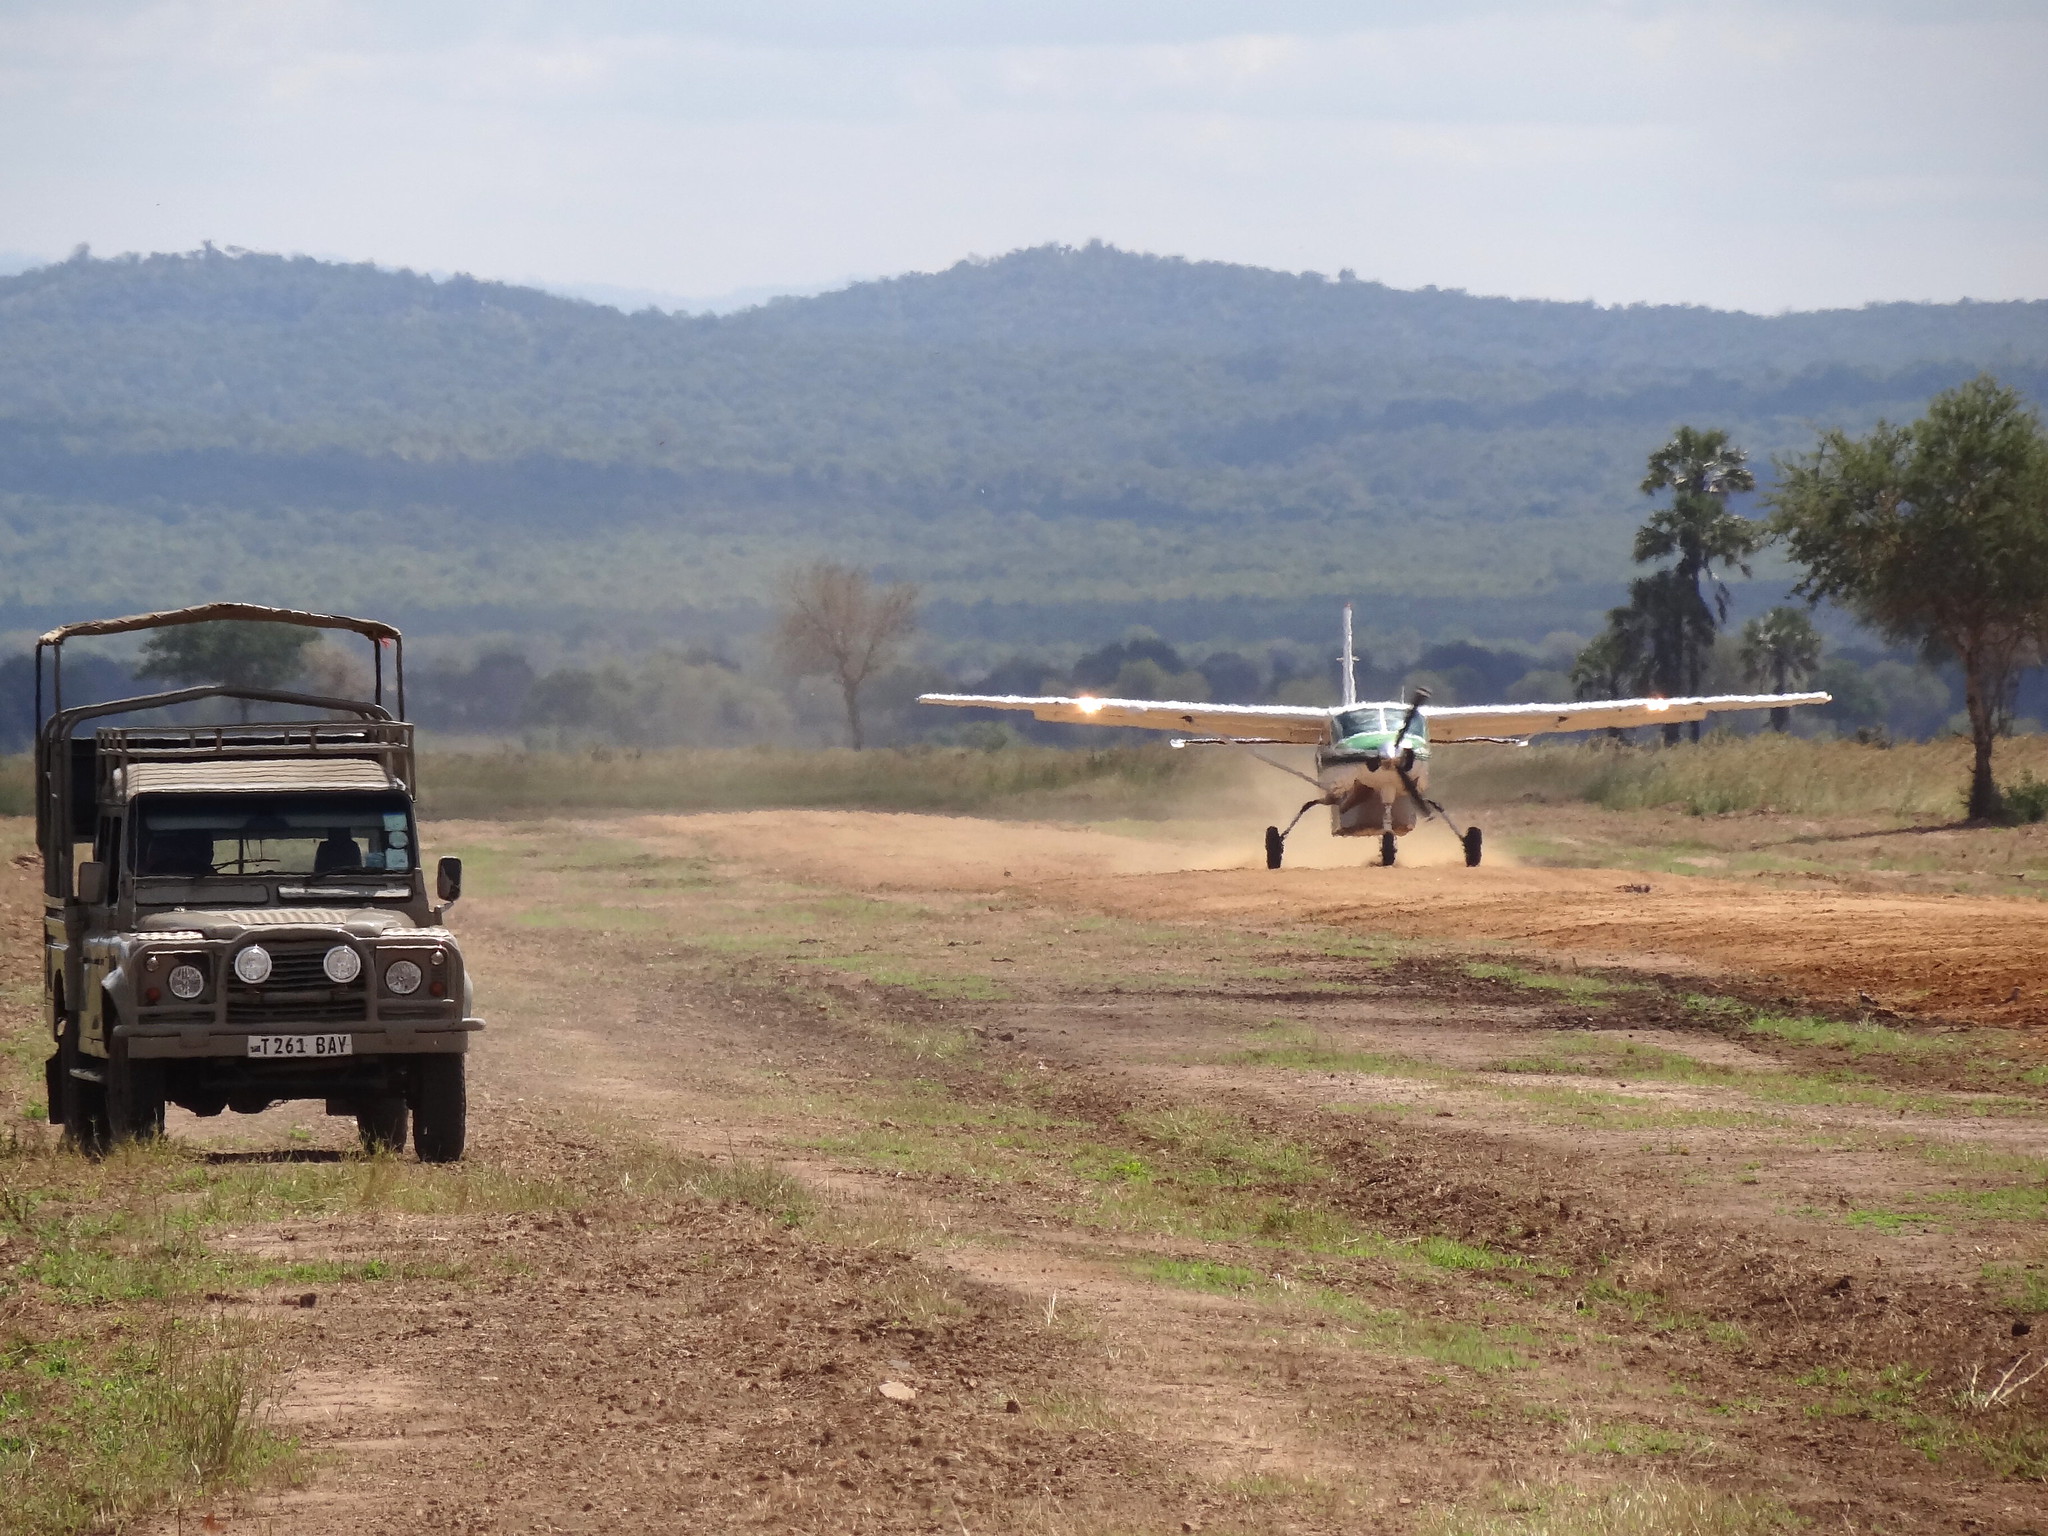 A Cessna landing alongside a Land Rover in Mikumi National Park, Tanzania. Photograph by Adam Jones, 2013. CC BY-SA 2.0.